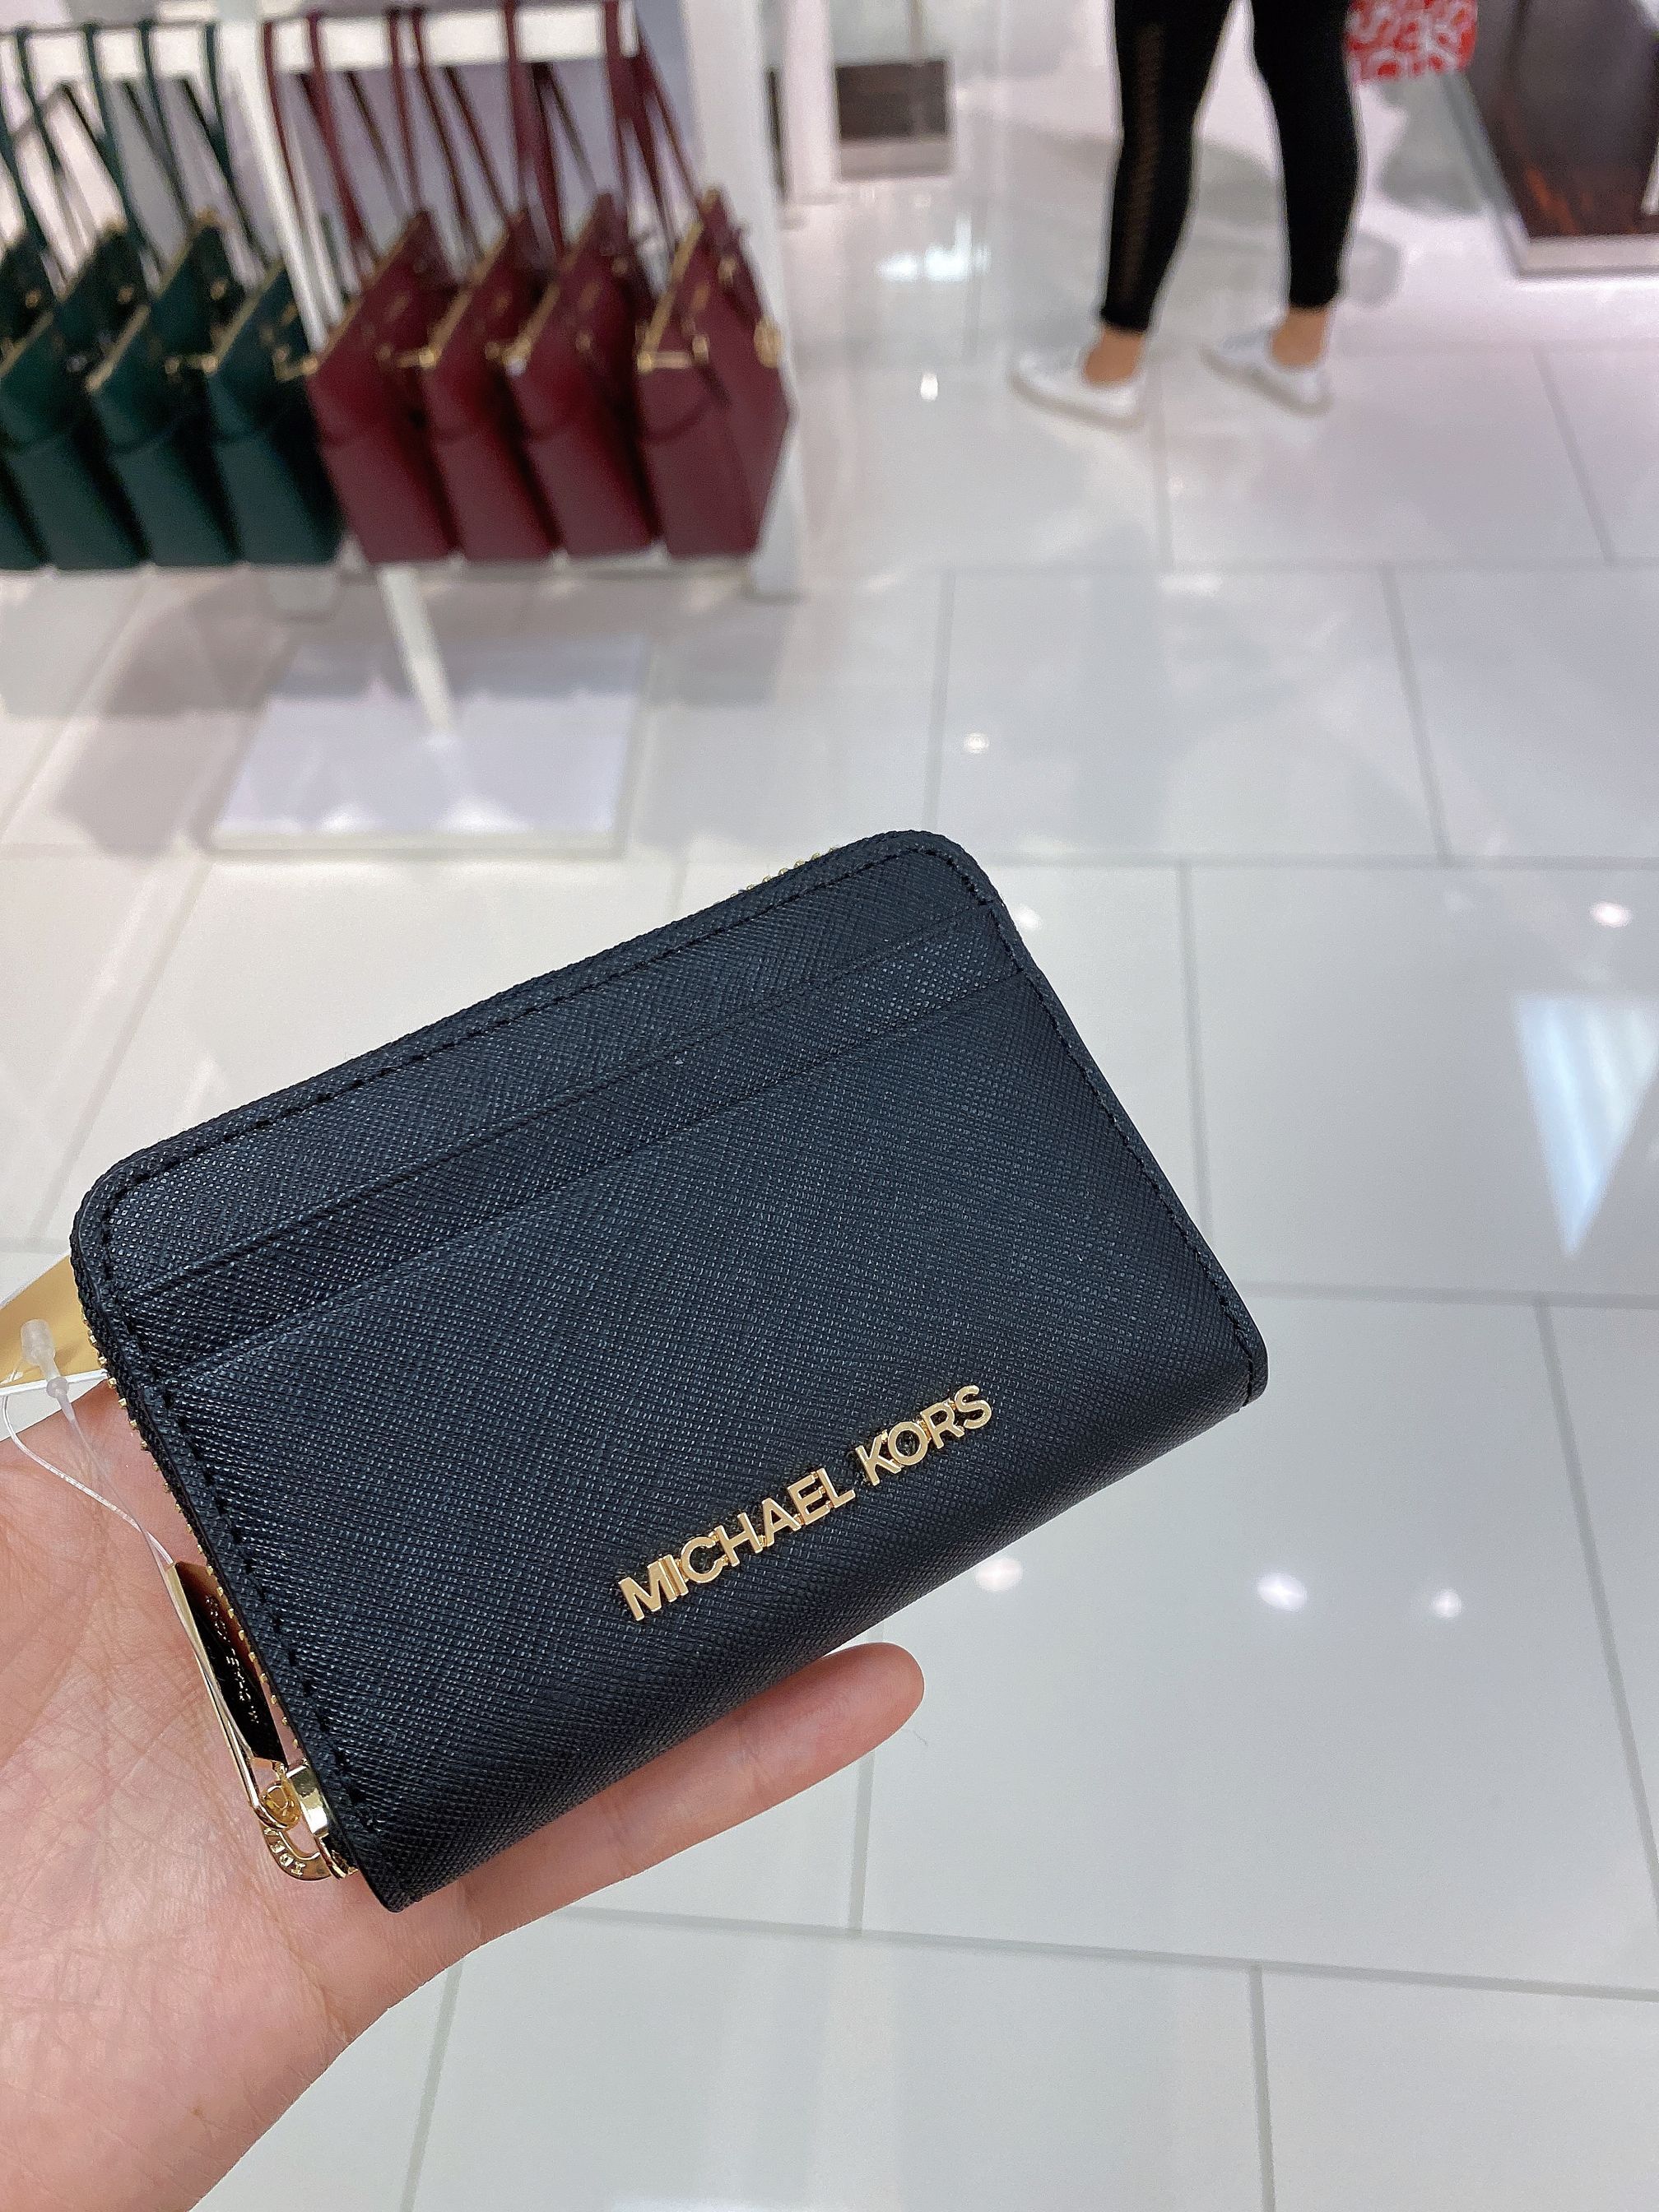 MICHAEL KORS Jet Set Medium Zip Around Leather Card Case Wallet Black Gold - image 1 of 3